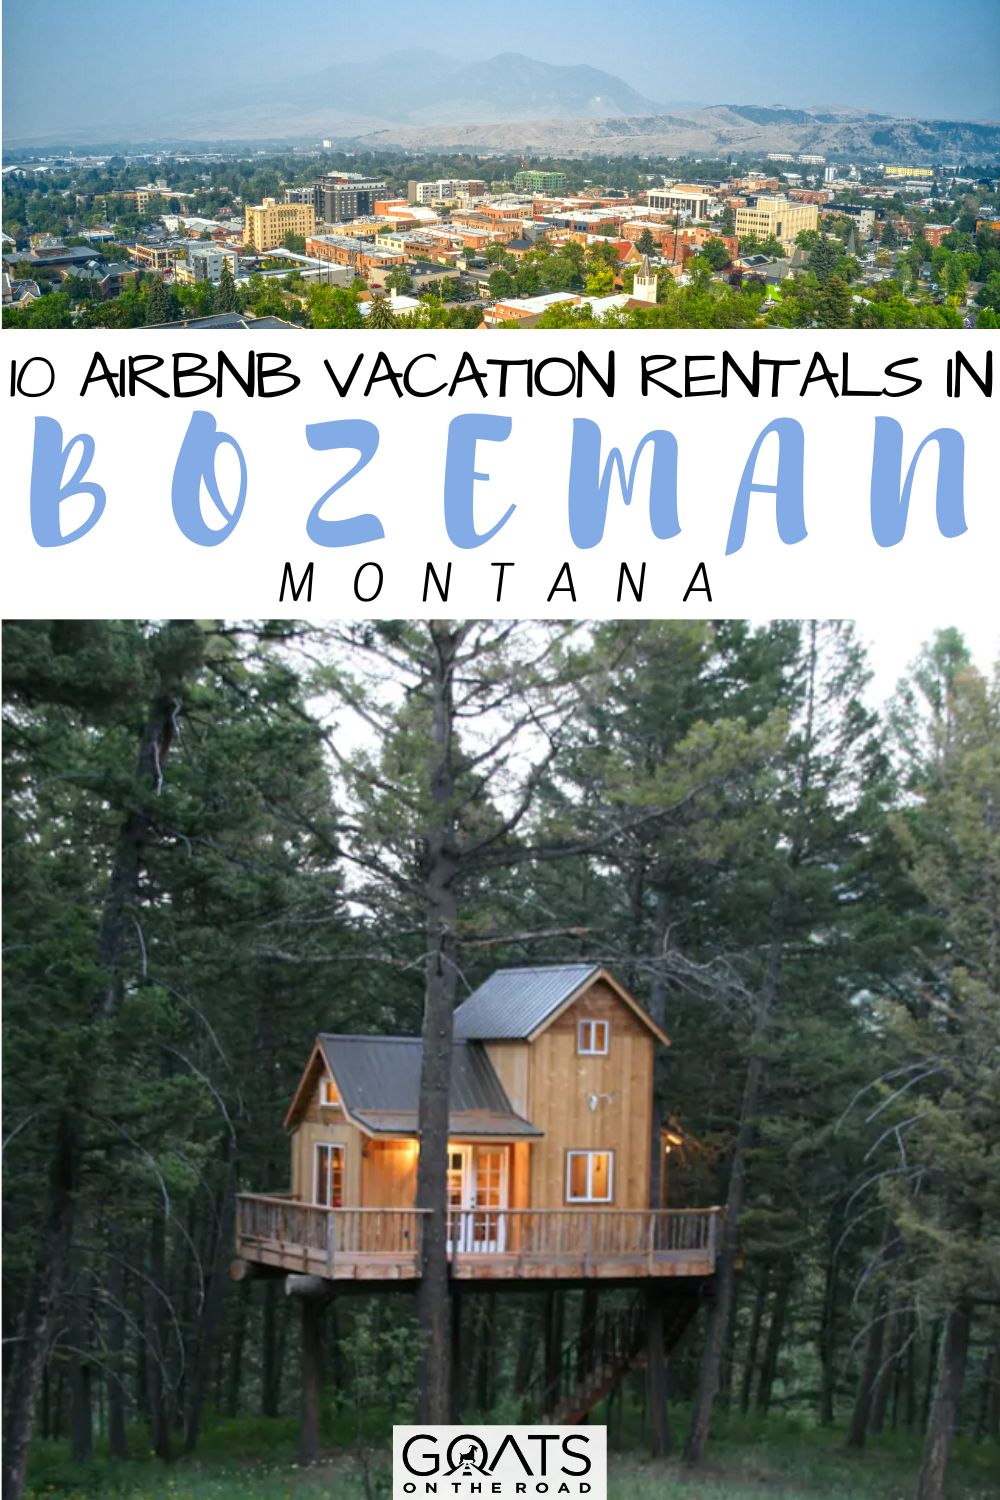 “10 Airbnb Vacation Rentals in Bozeman, Montana